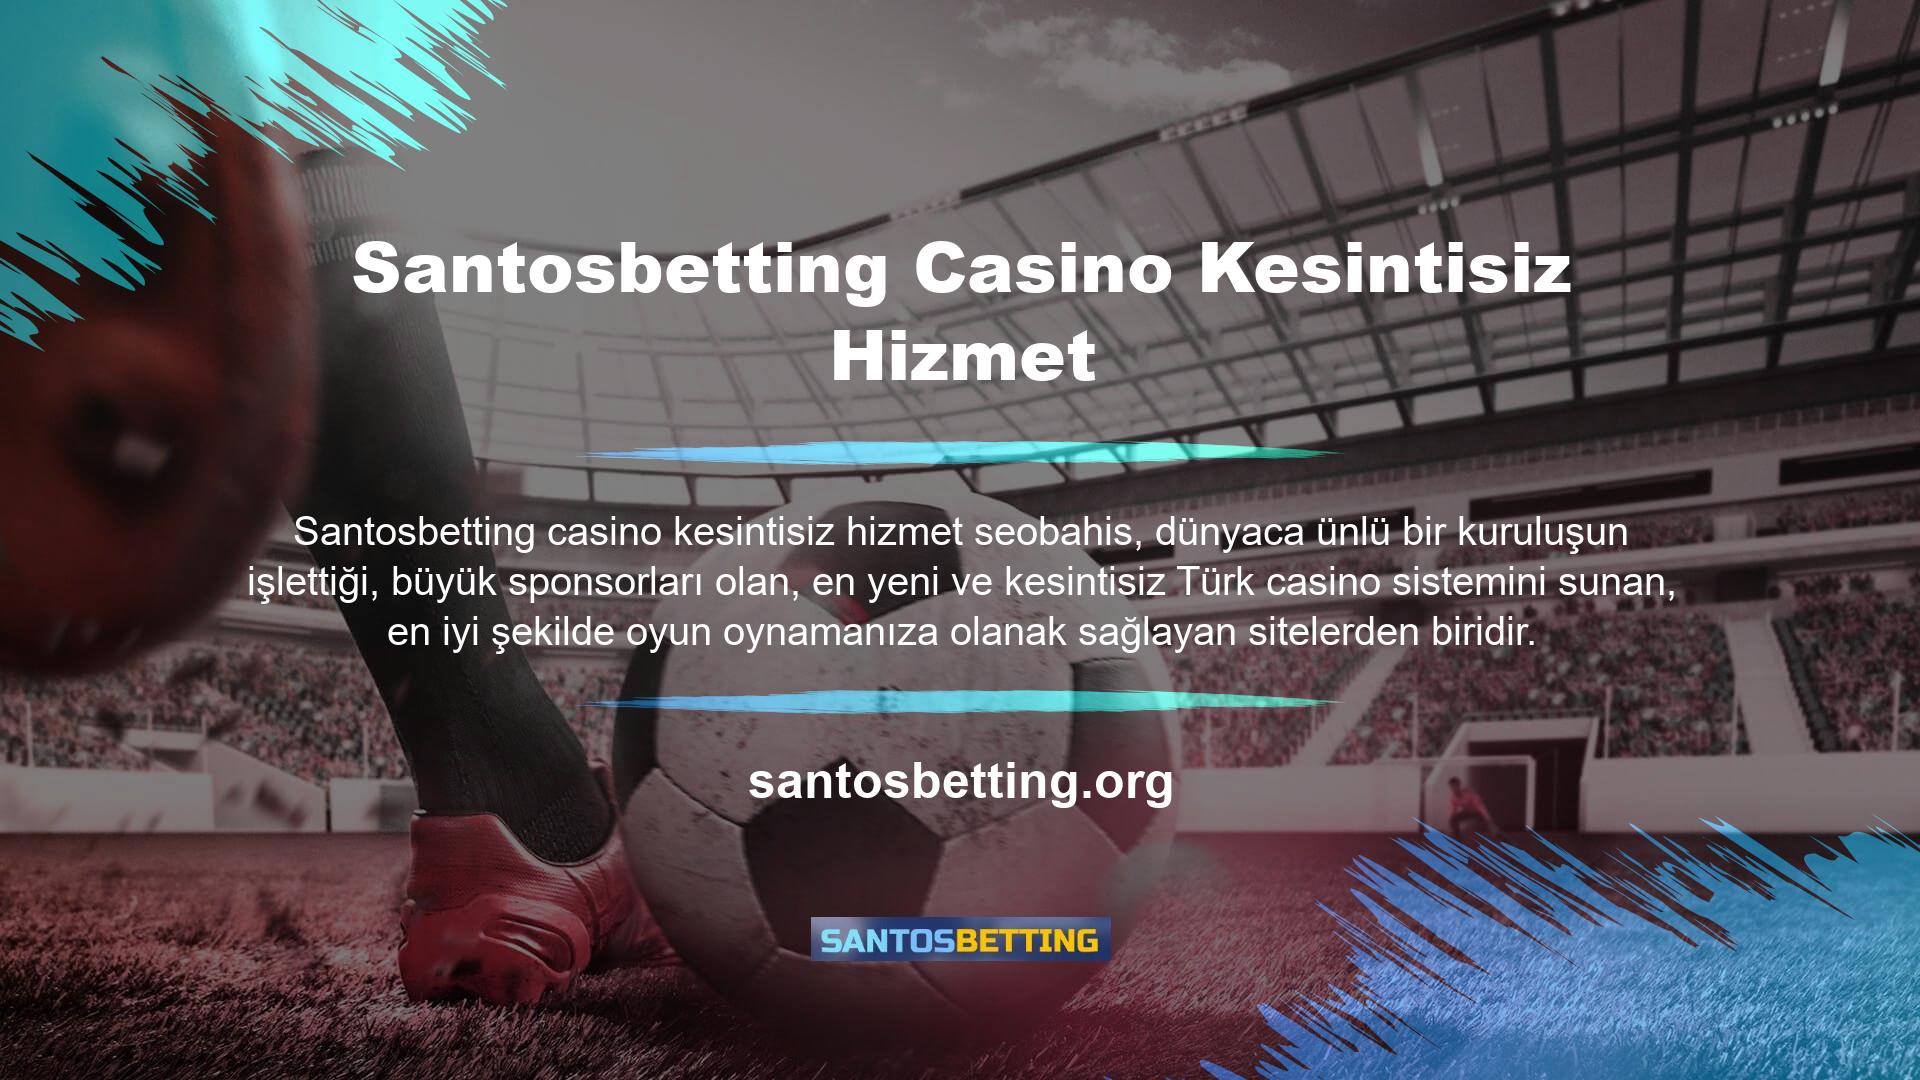 Bir göz atarsanız Santosbetting Casino dünyaca ünlü programlarla doludur